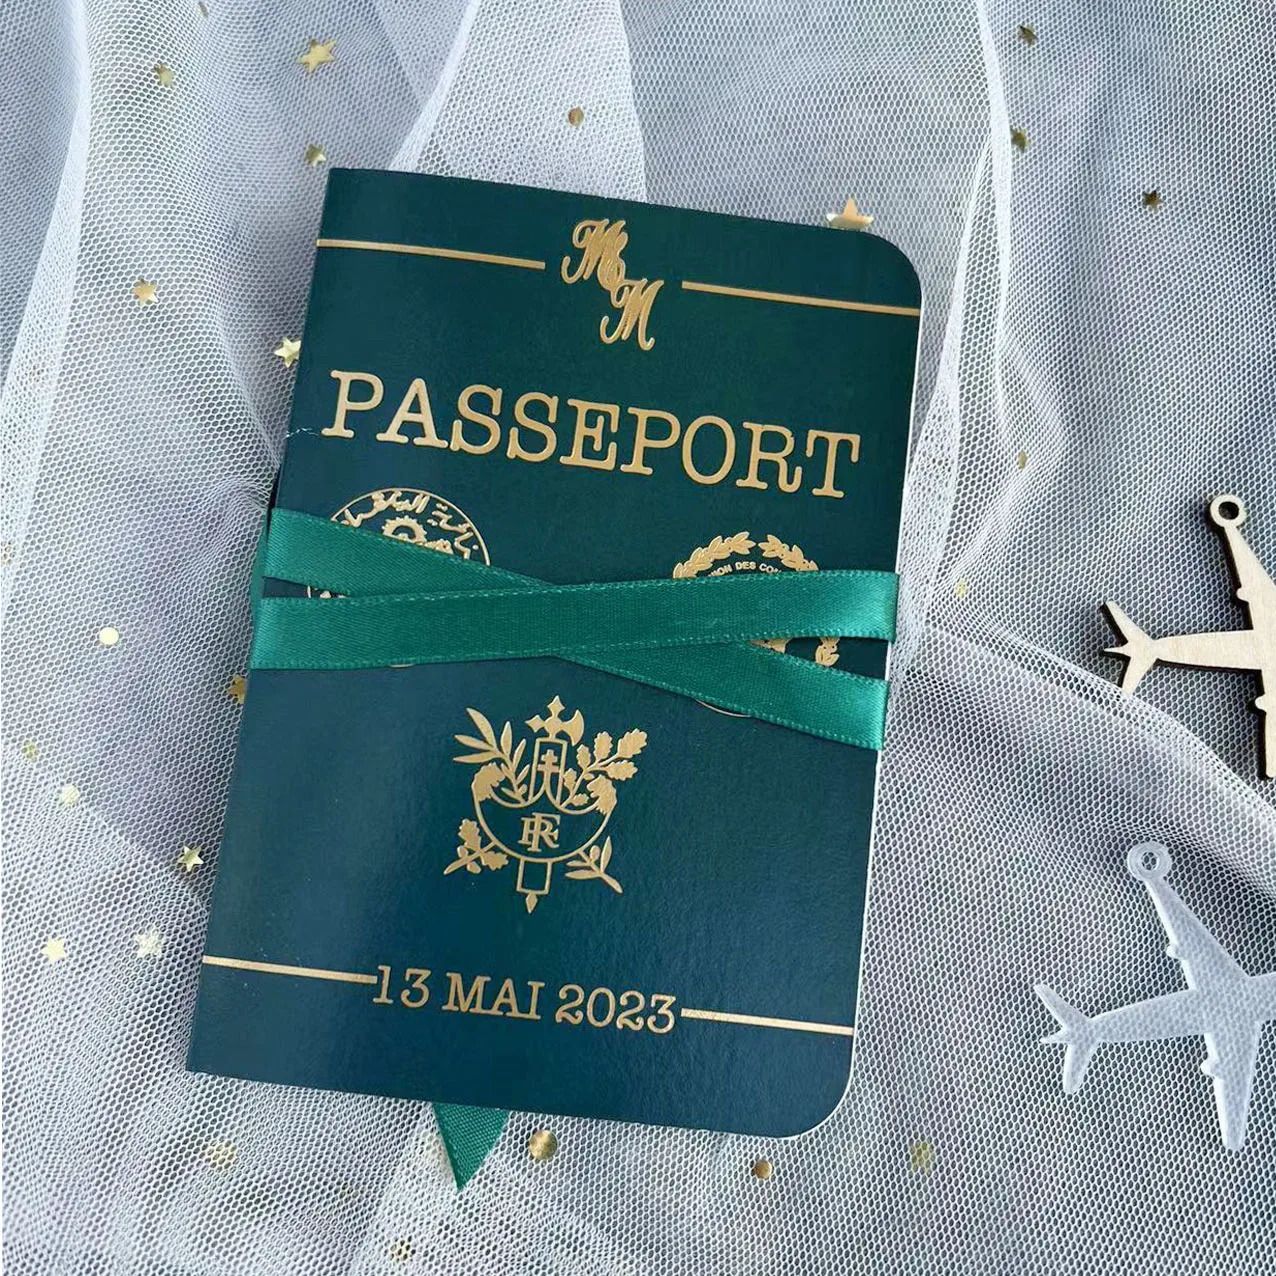 Reisepass mit Nachricht hinterlassen